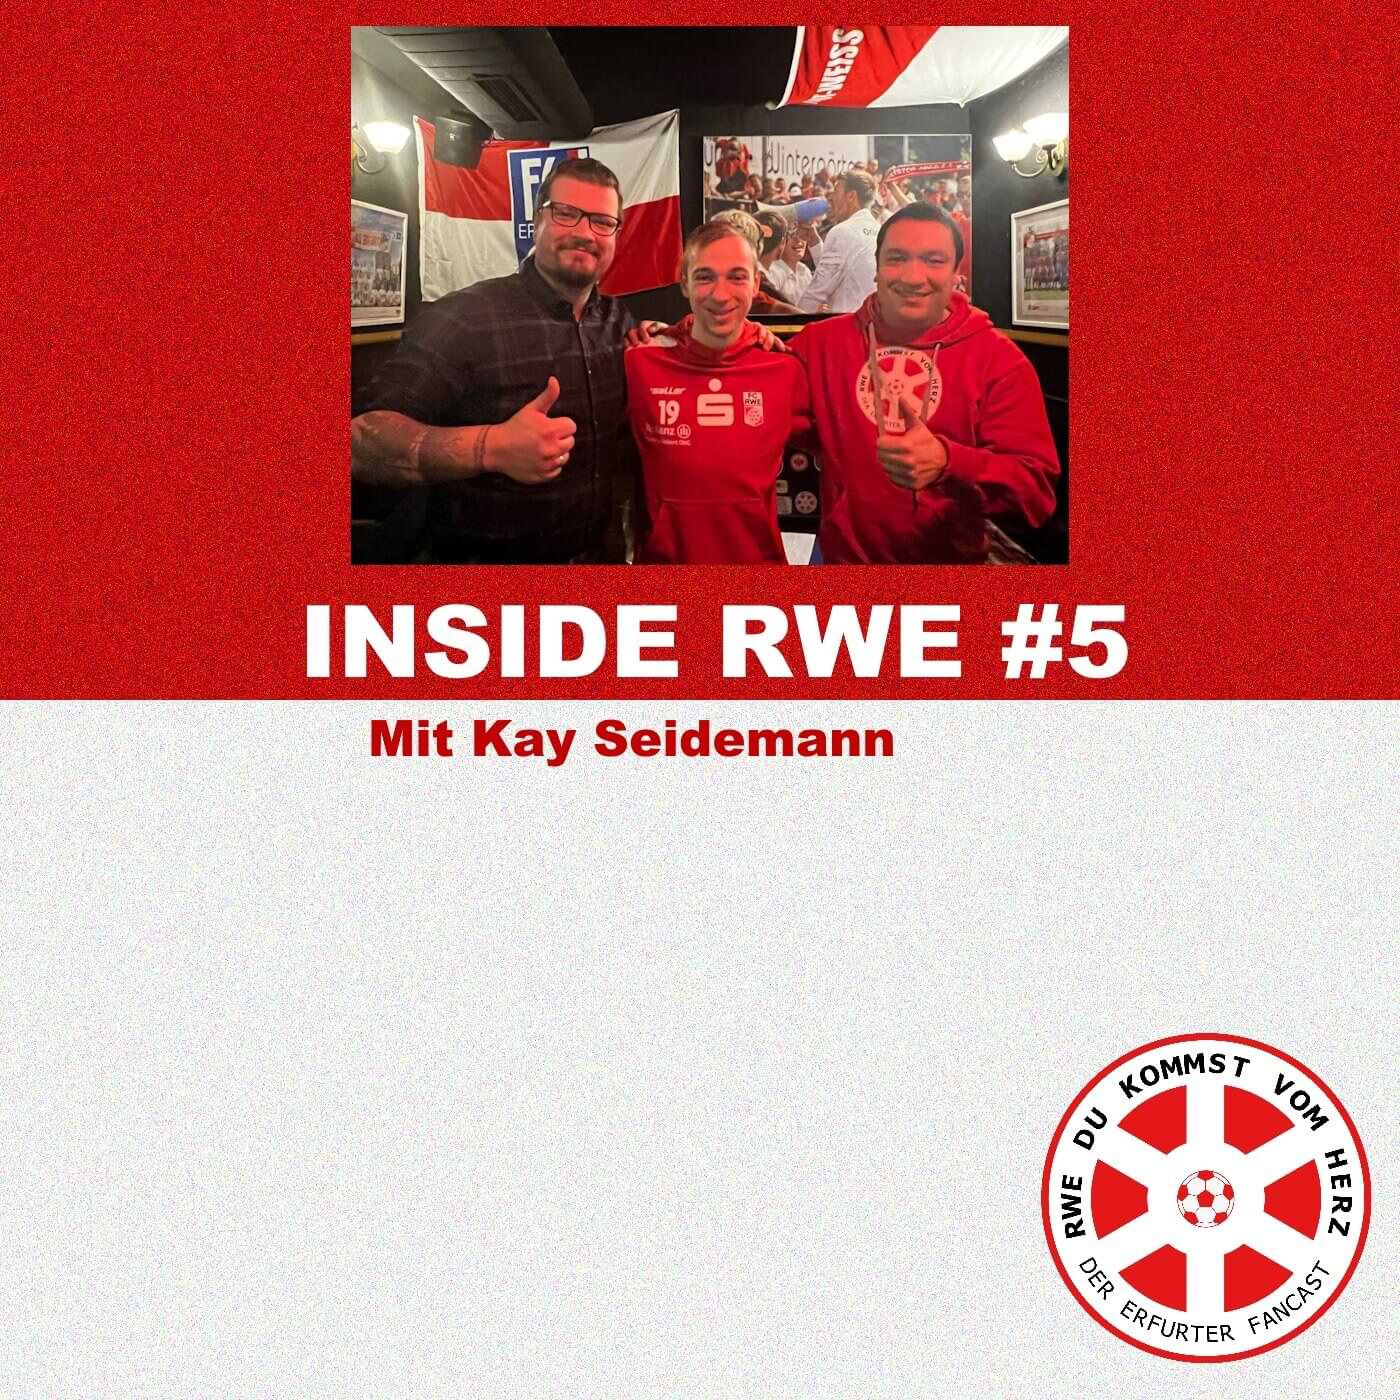 #46 INSIDE RWE #5 Mit Kay Seidemann